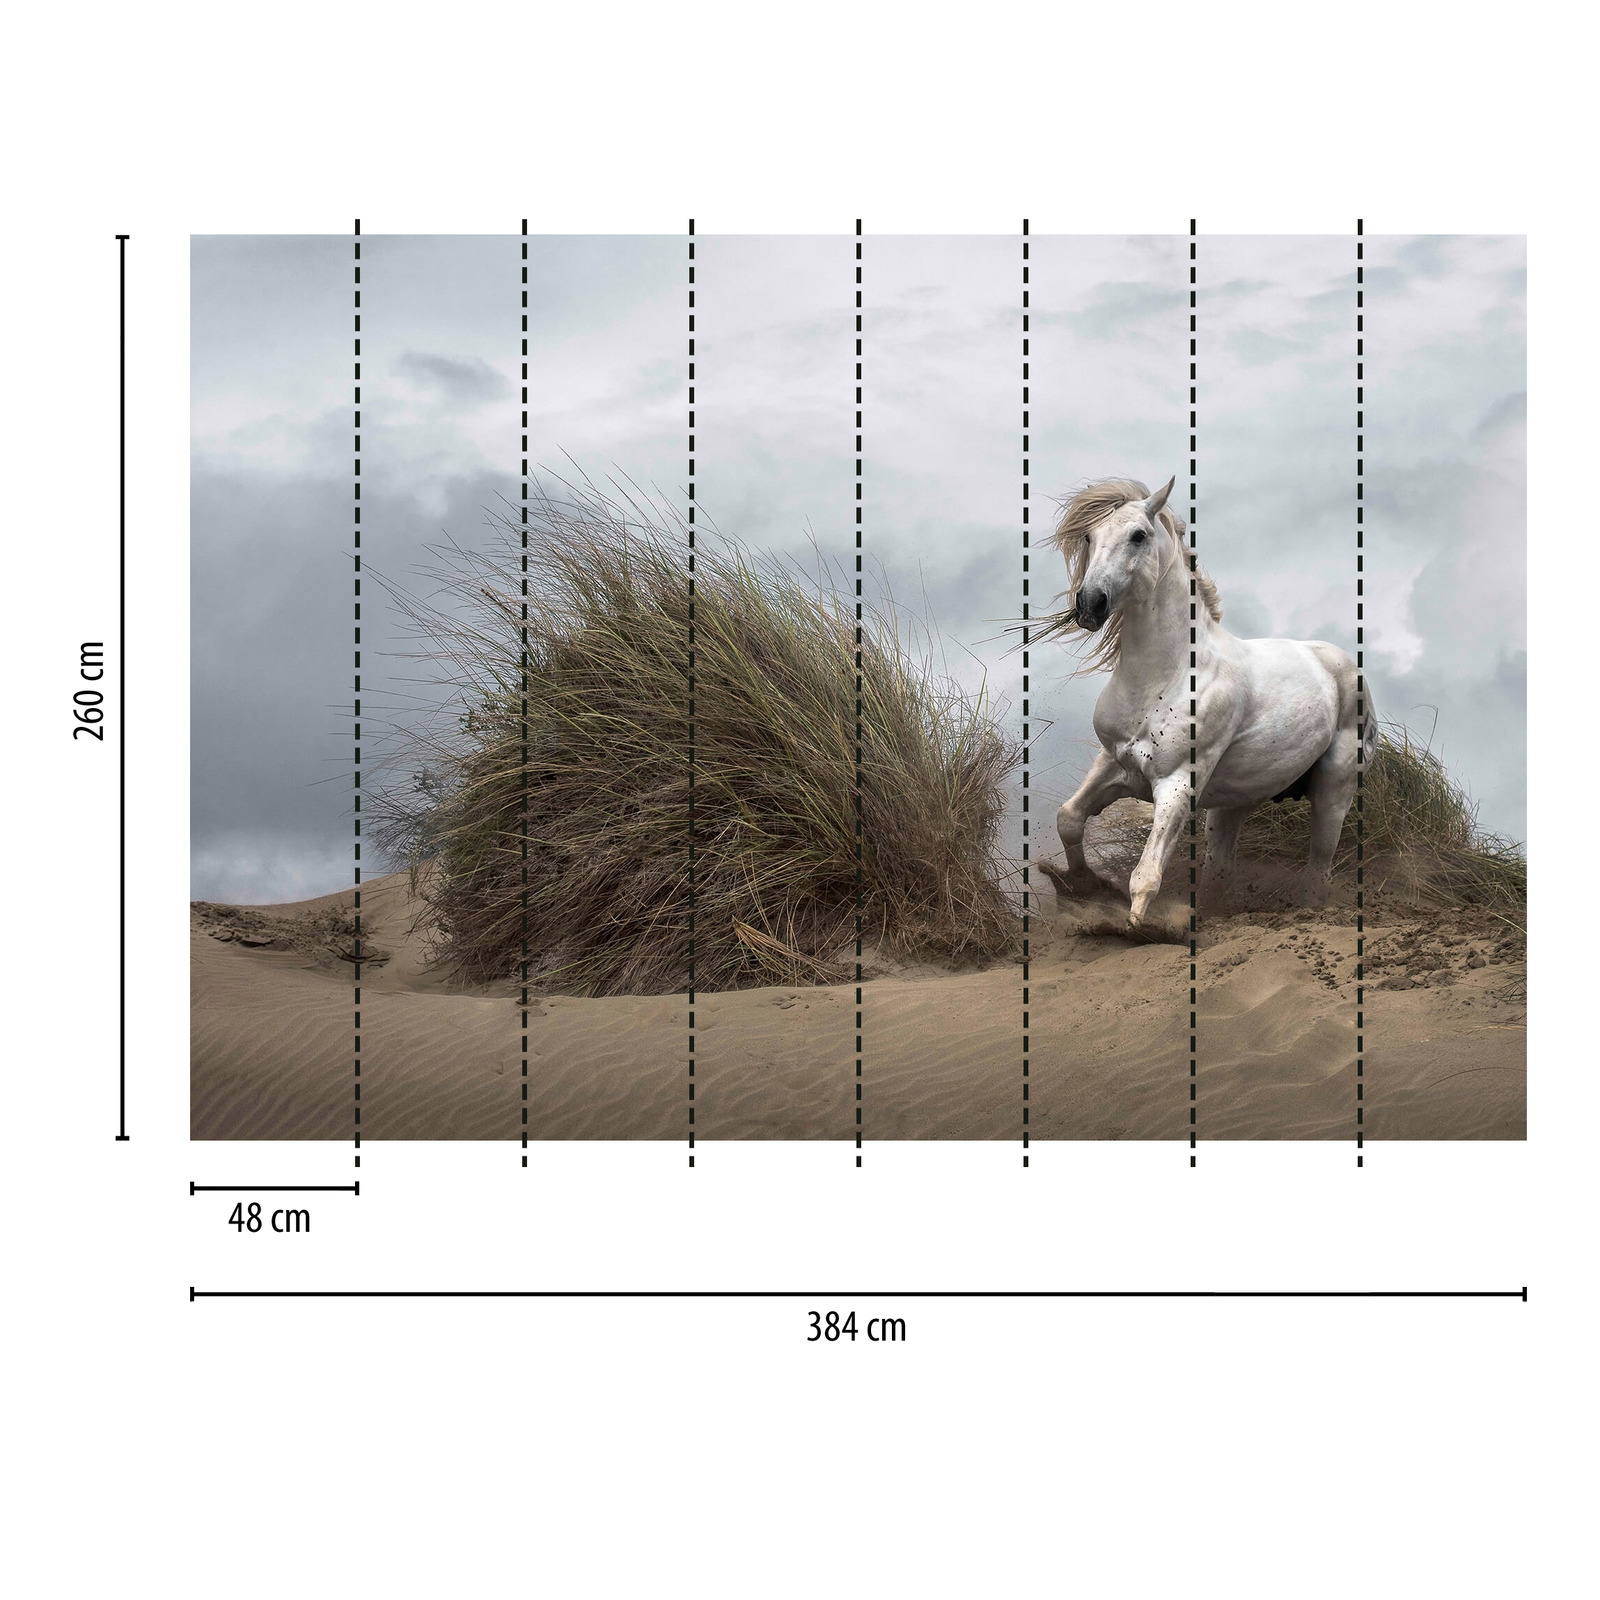             Photo wallpaper wild horse on the beach - white, beige, grey
        